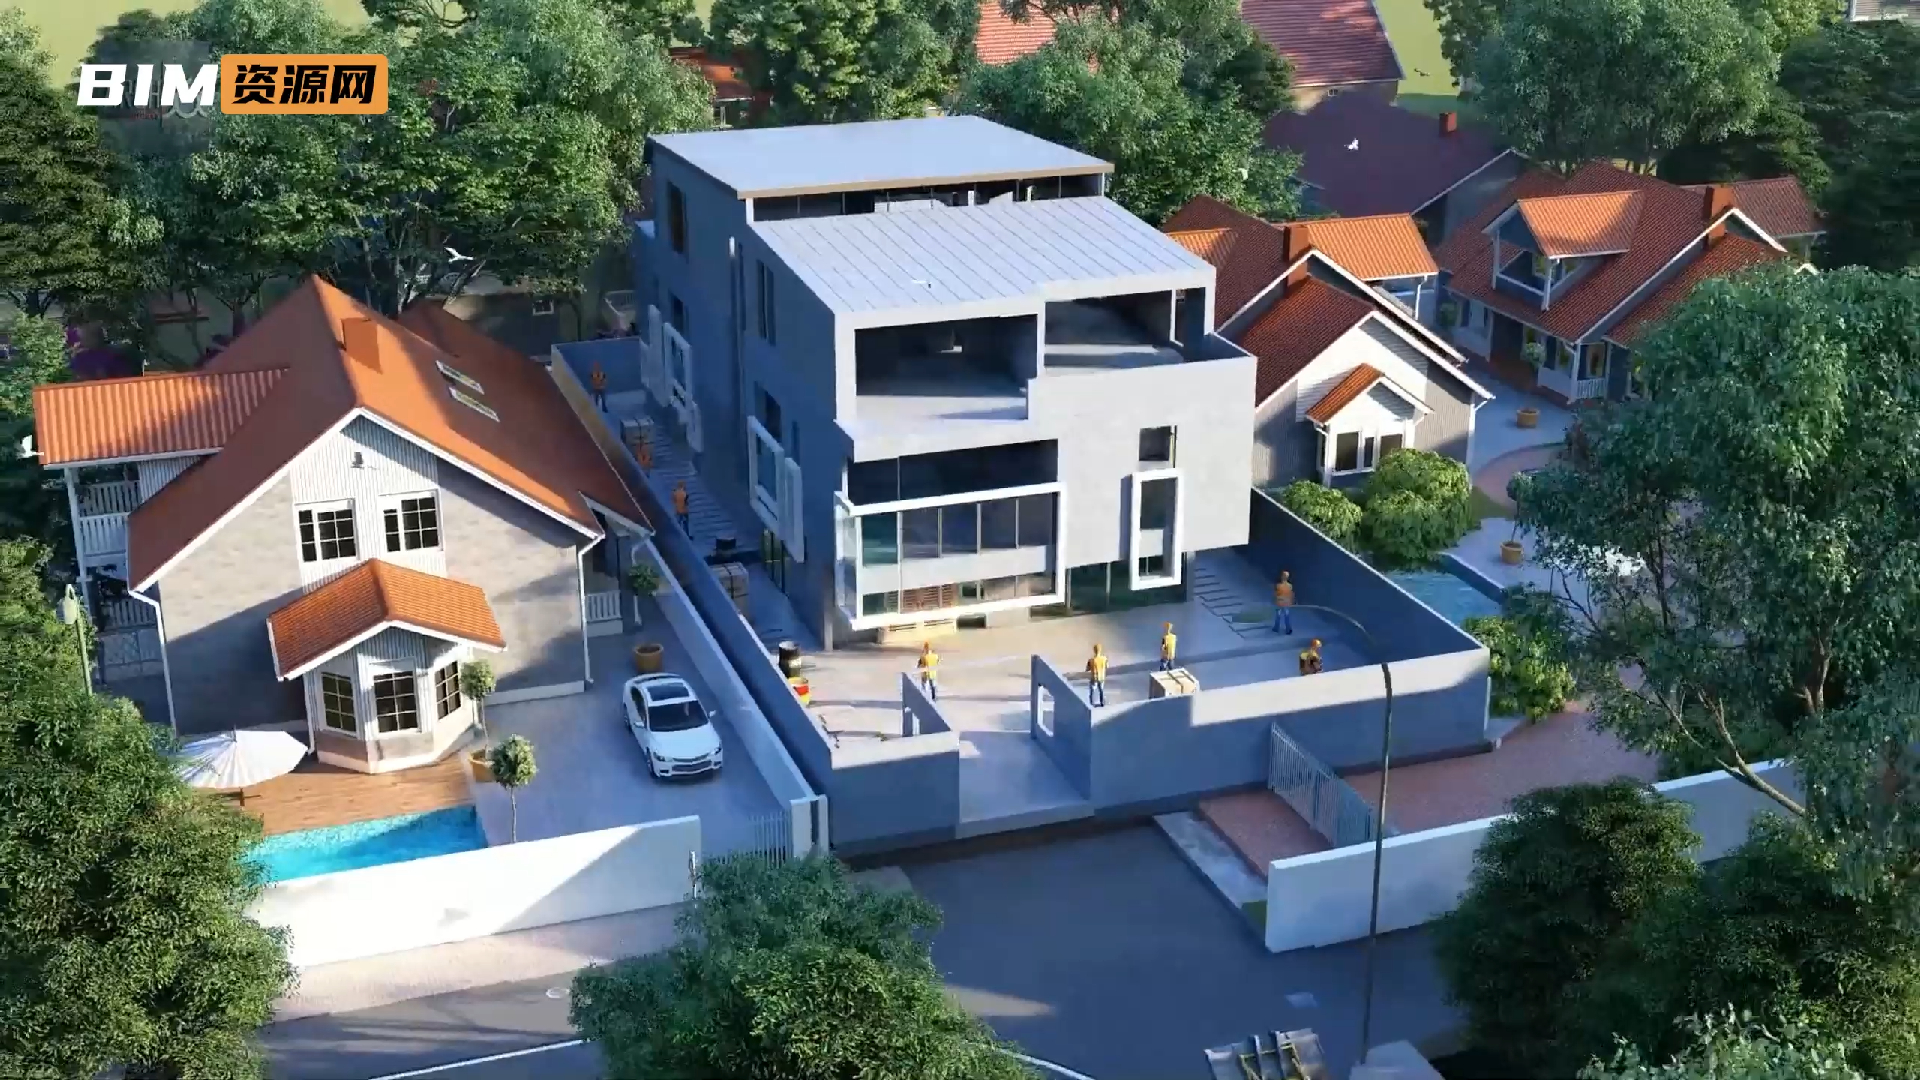 BIM房屋建造动画演示，使用Lumion高质量渲染